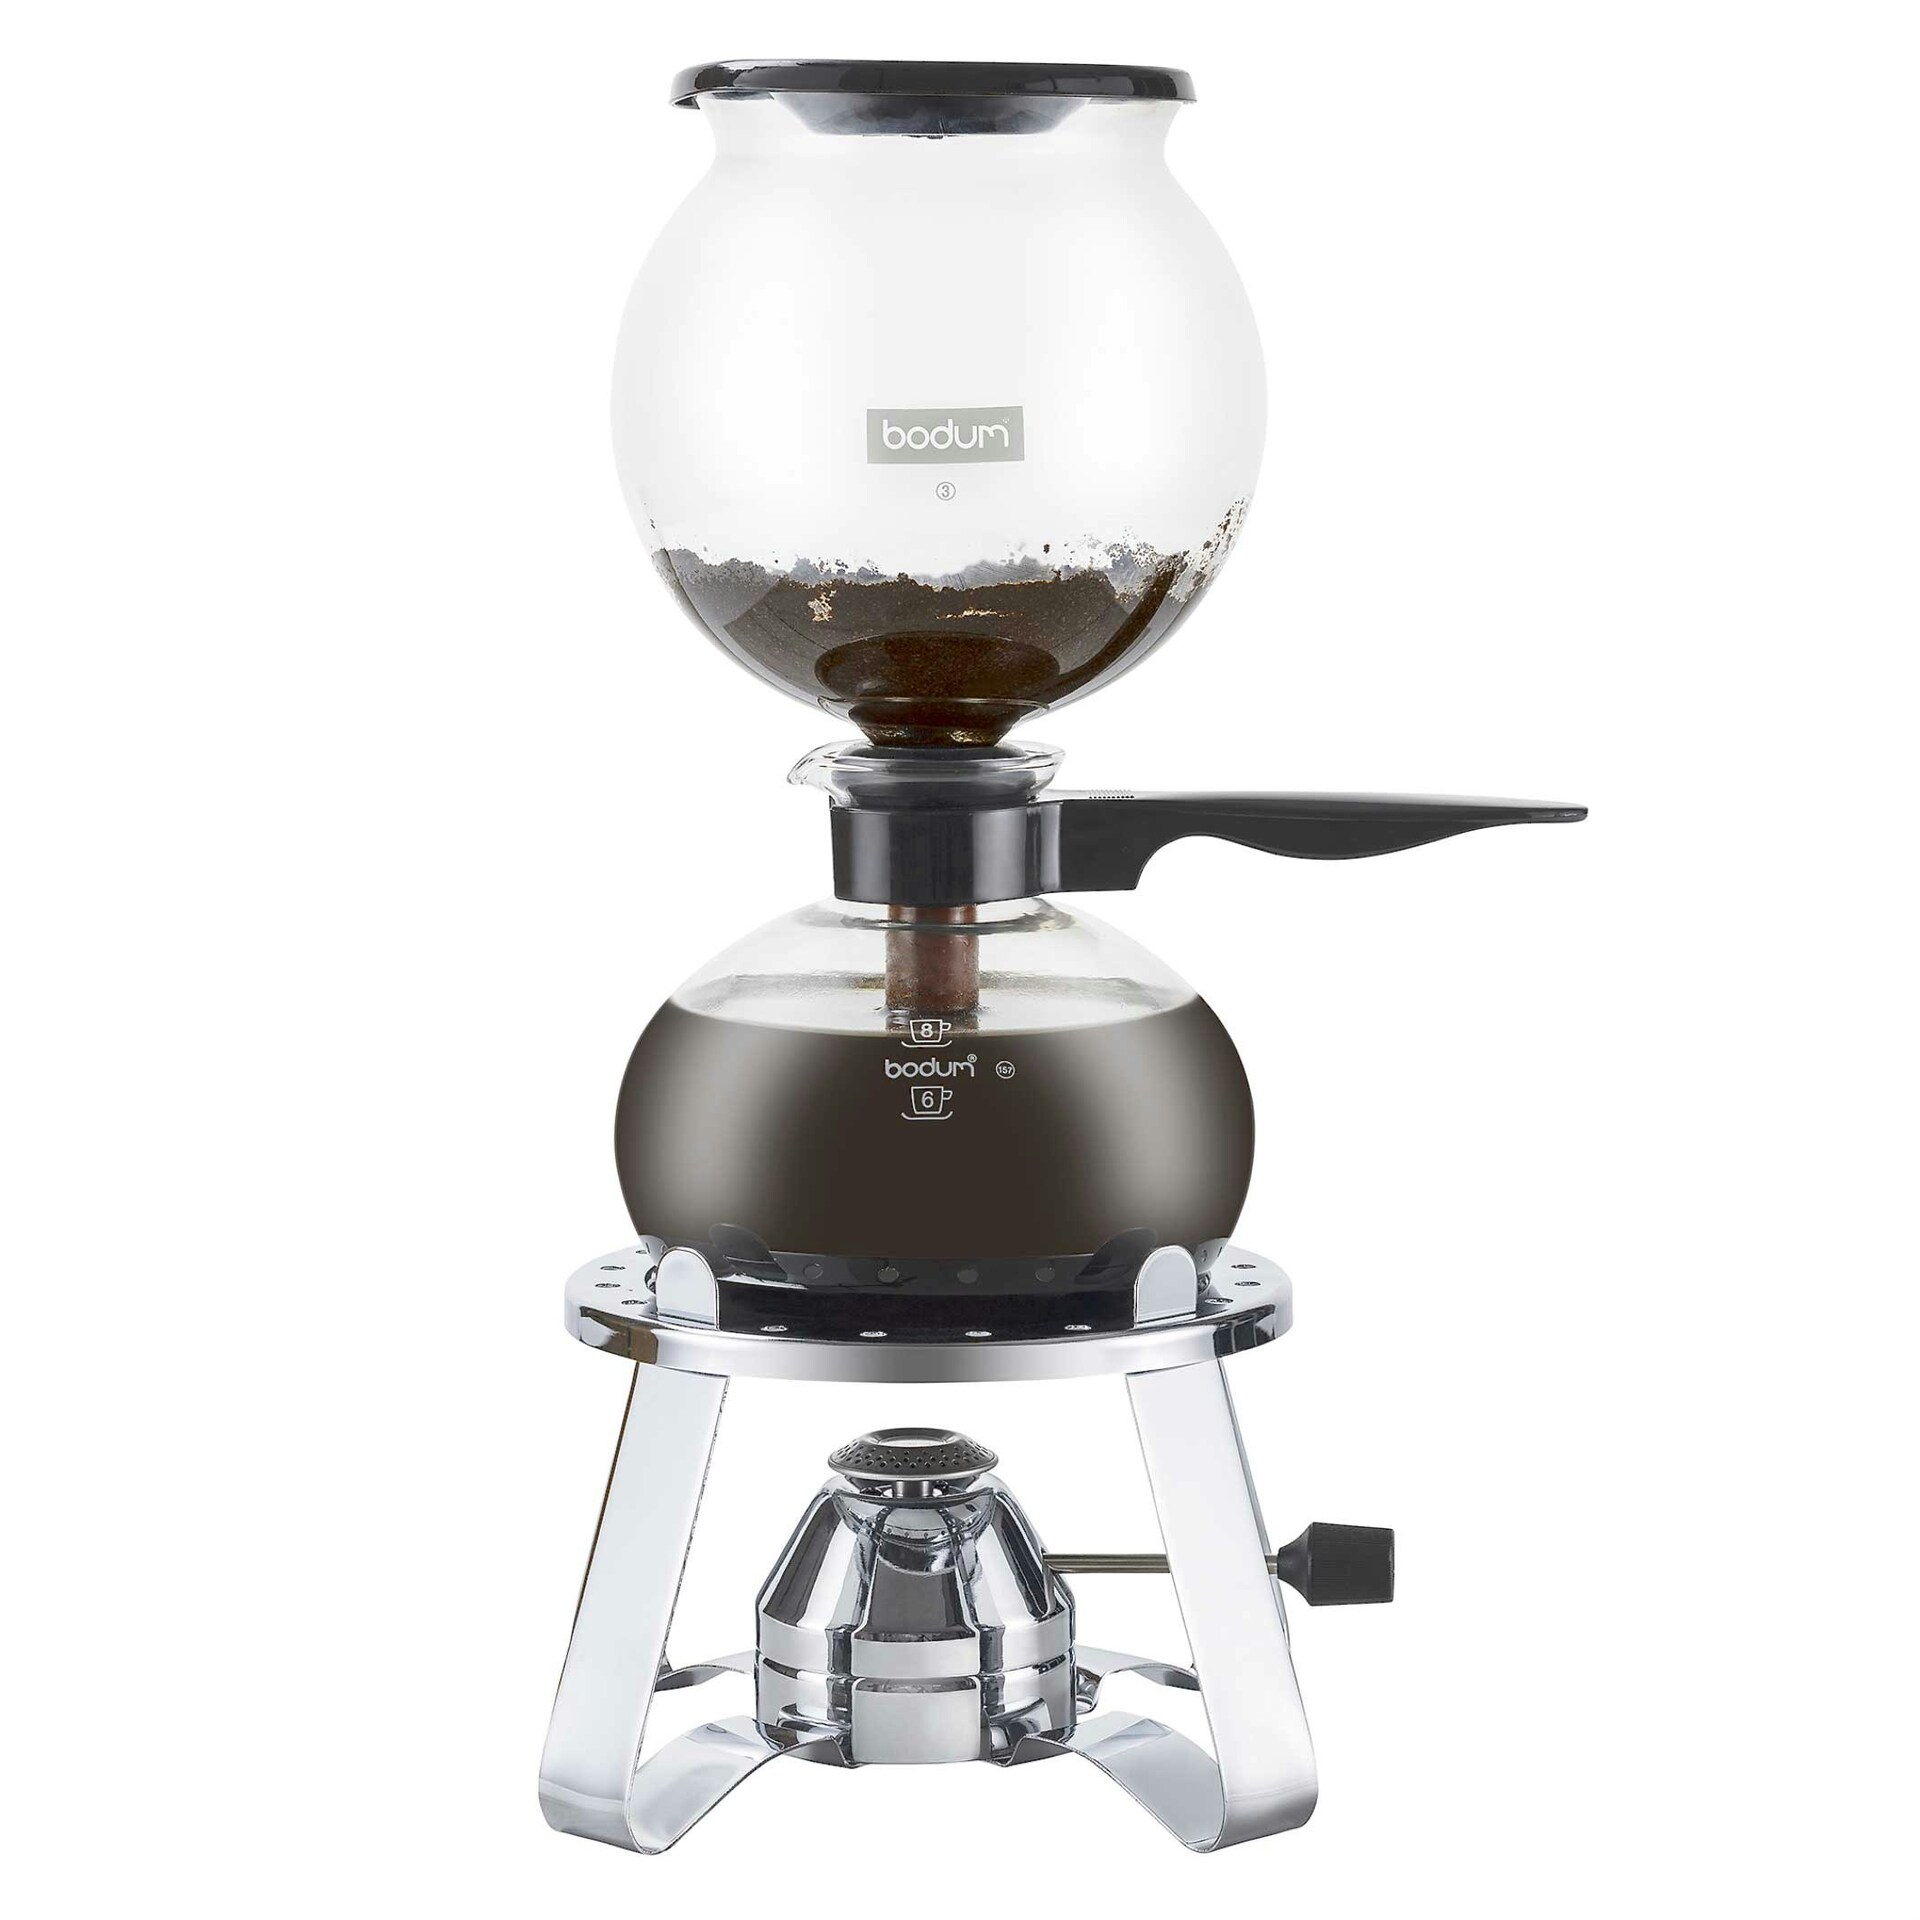 https://royaldesign.com/image/2/bodum-pebo-vacuum-coffee-maker-1-l-black-1